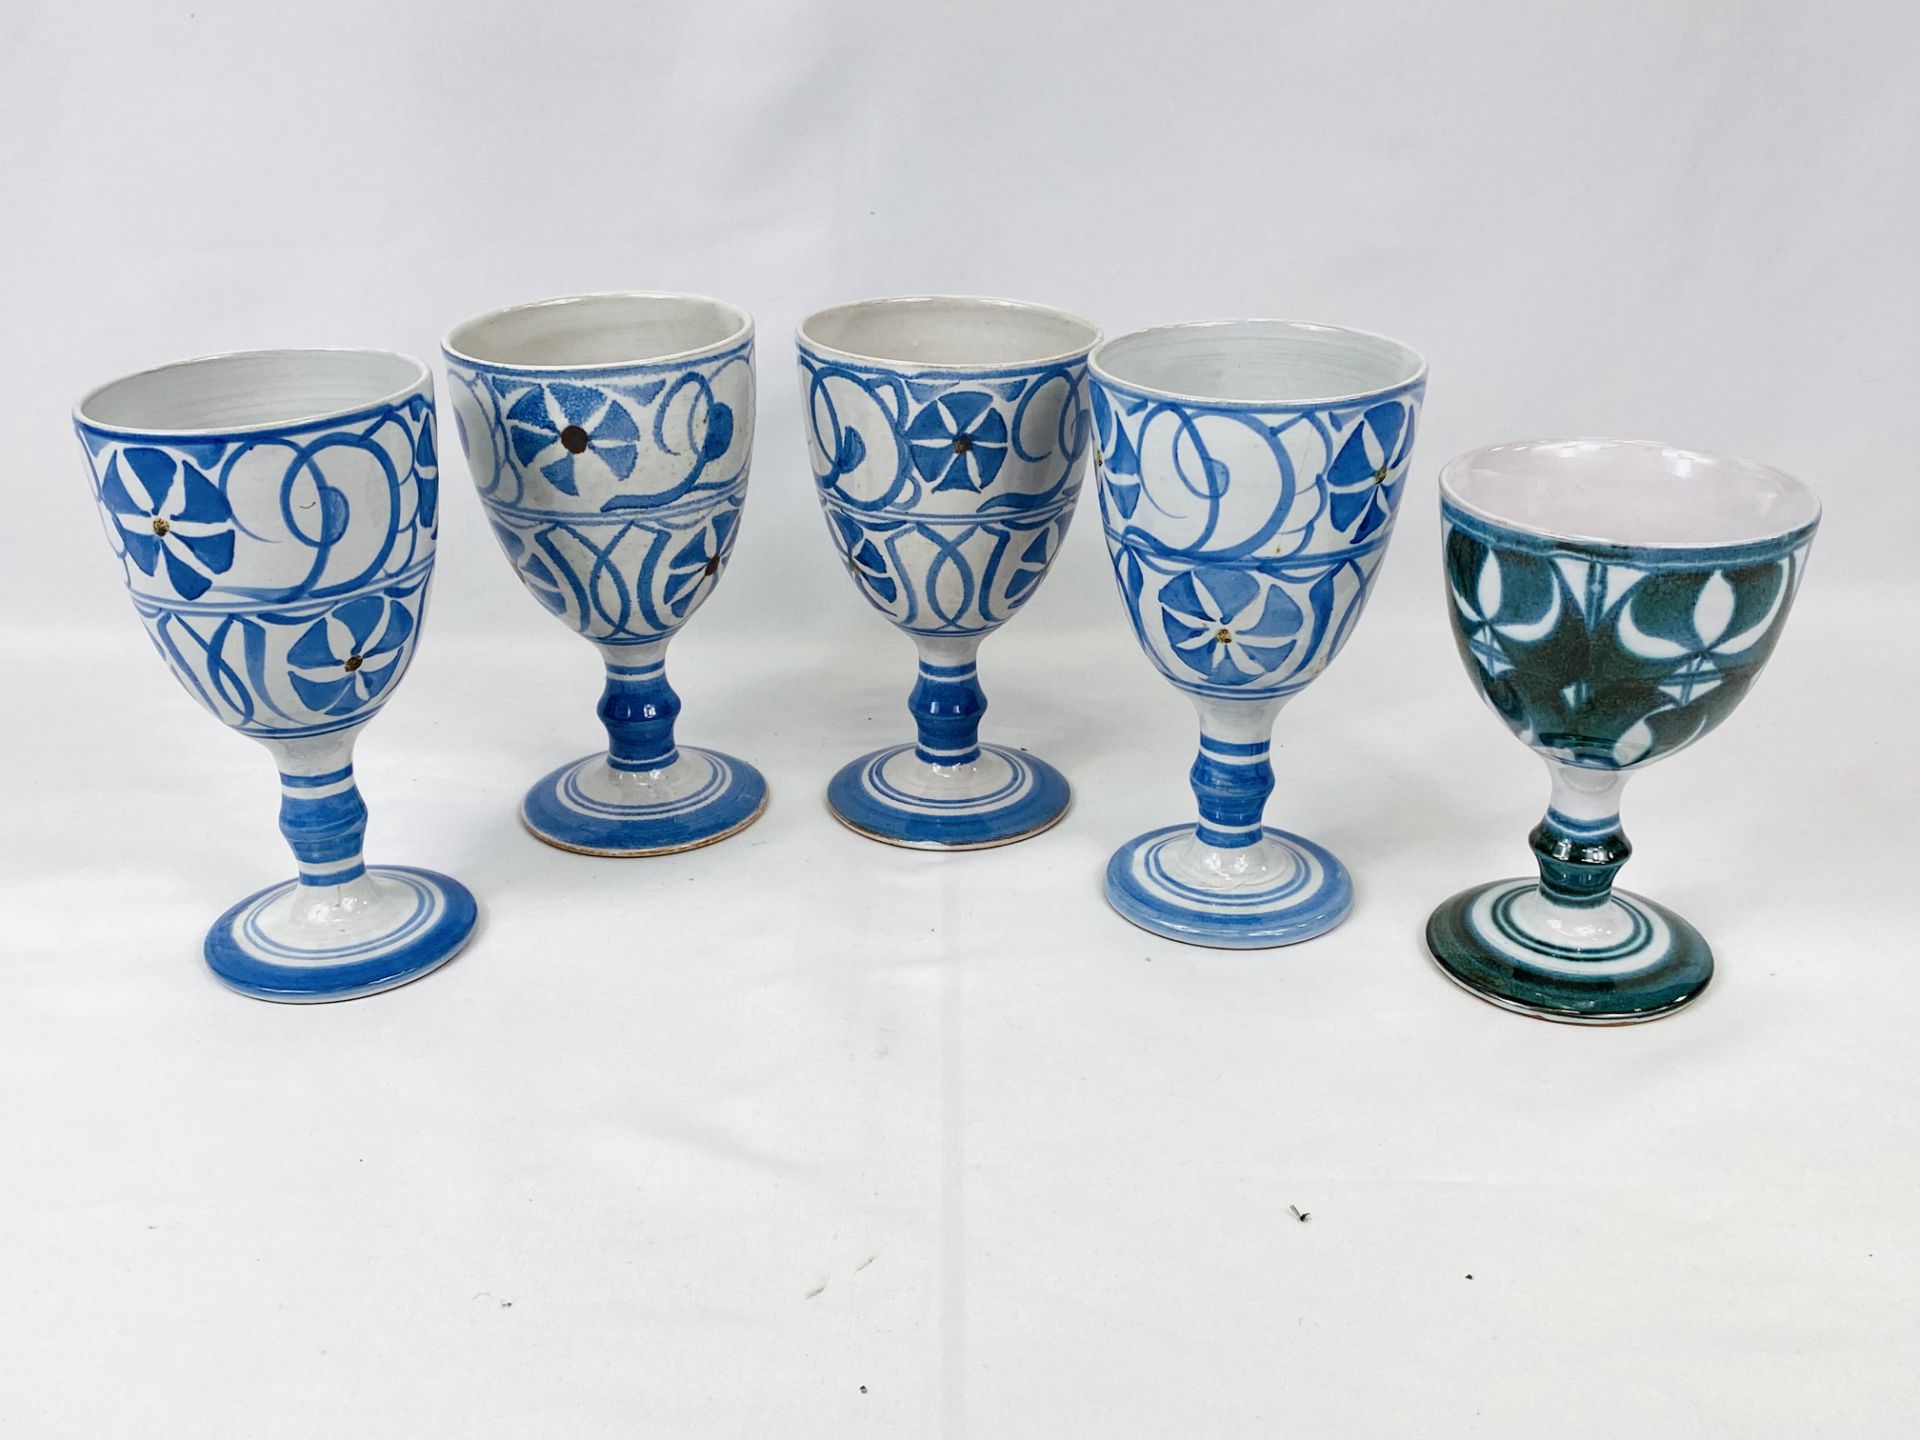 Five Aldermaston pottery goblets